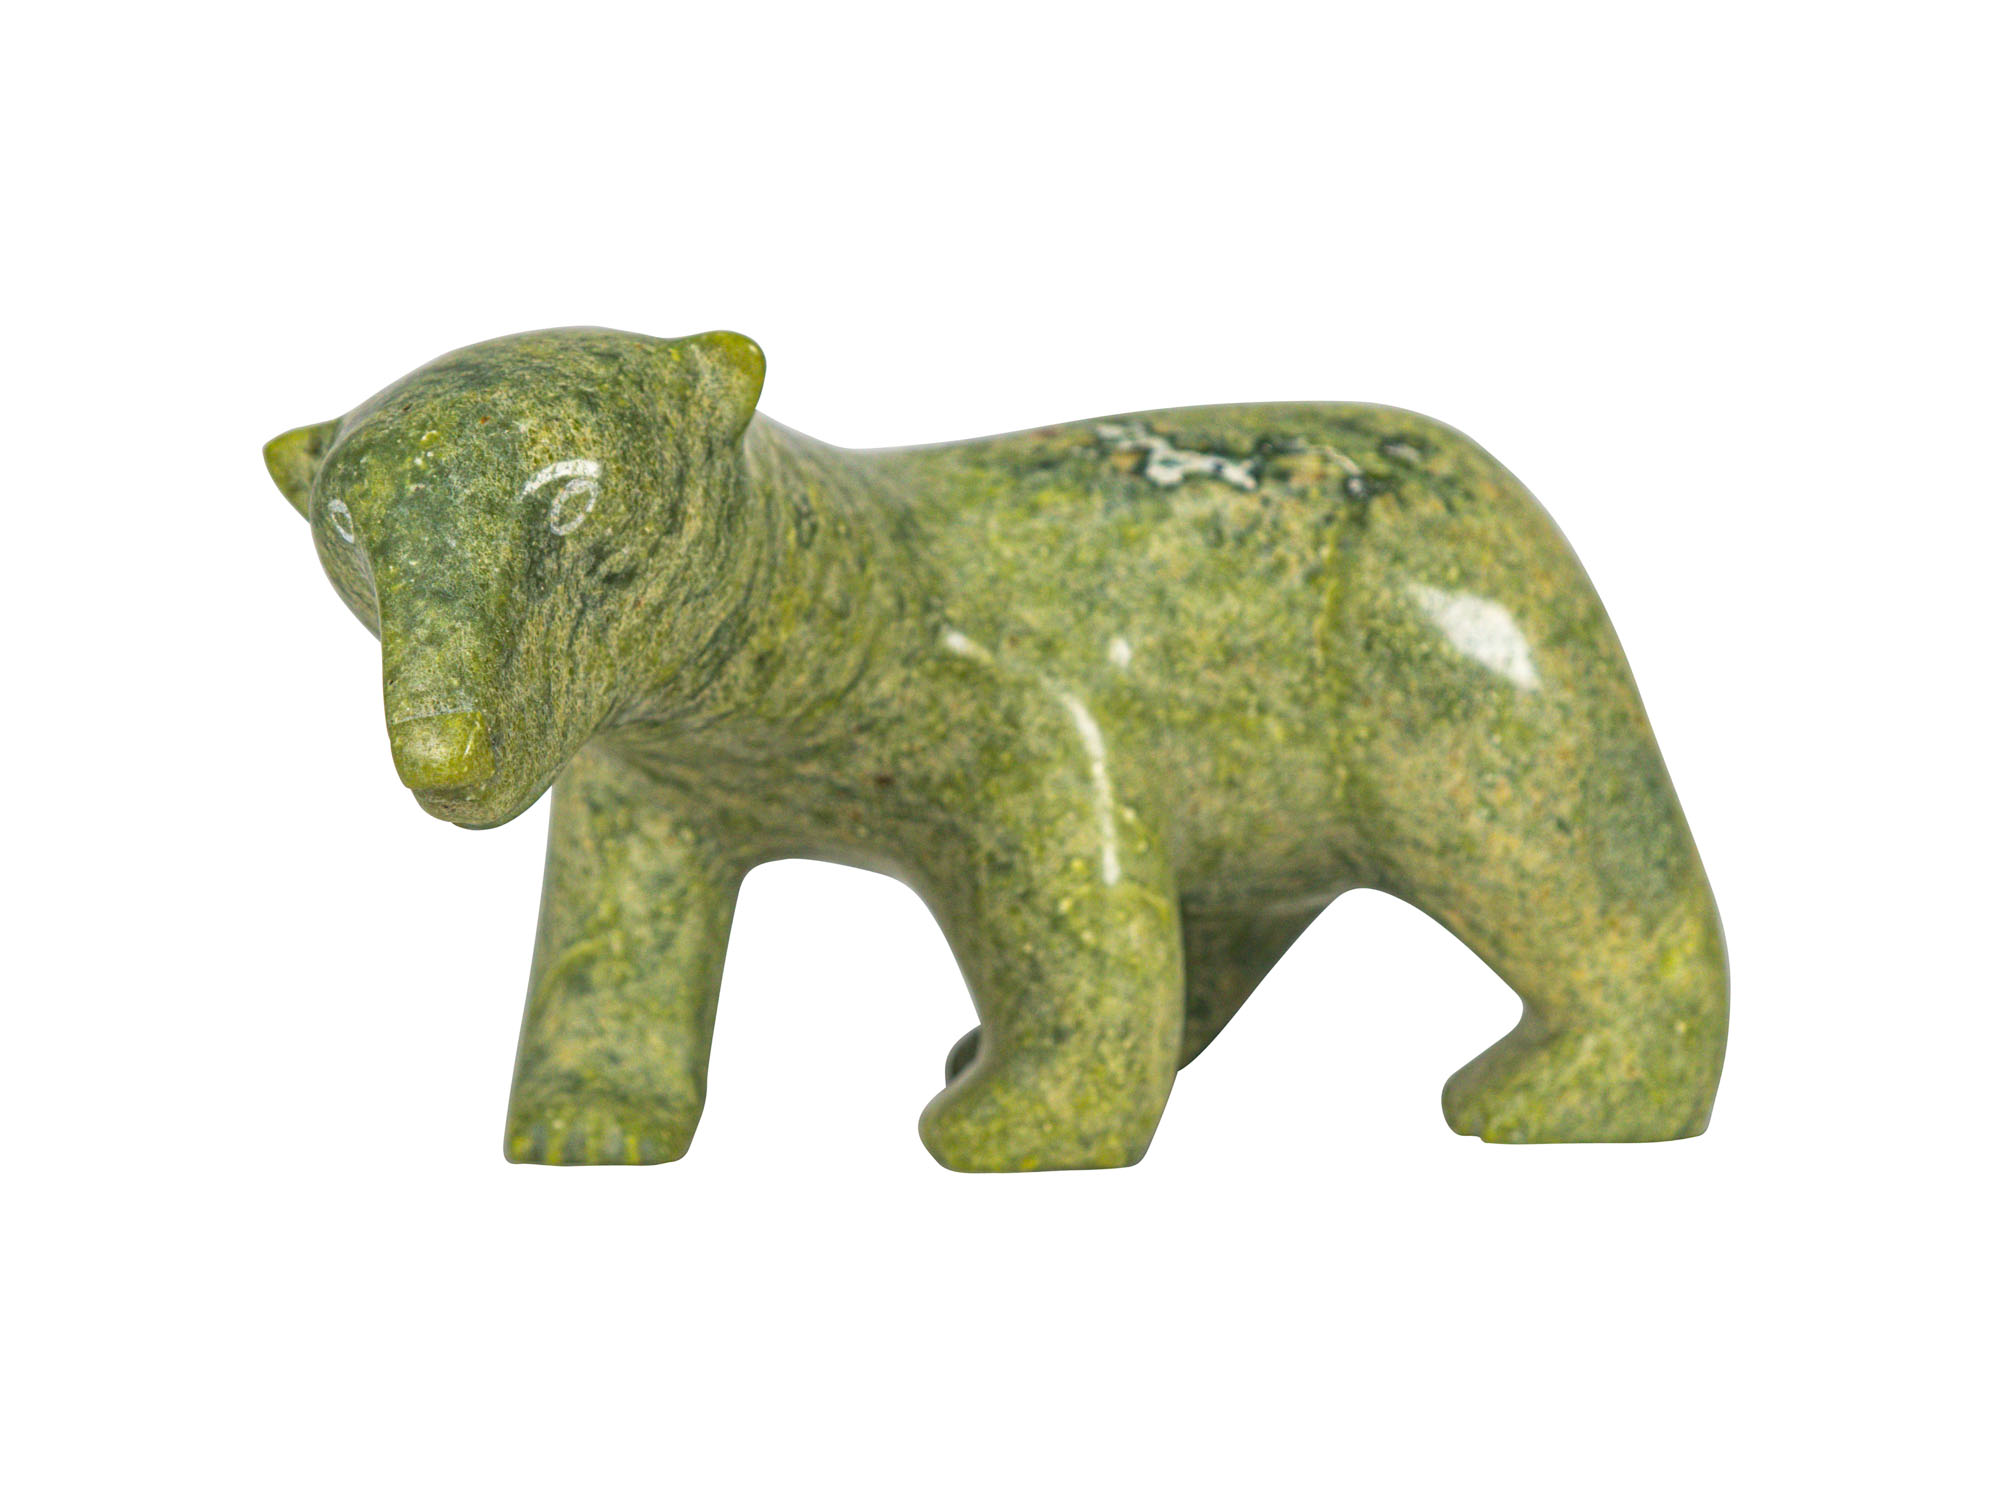 Inuit Soapstone Carving: Bear: Gallery Item - 44-G41 (10URM1)